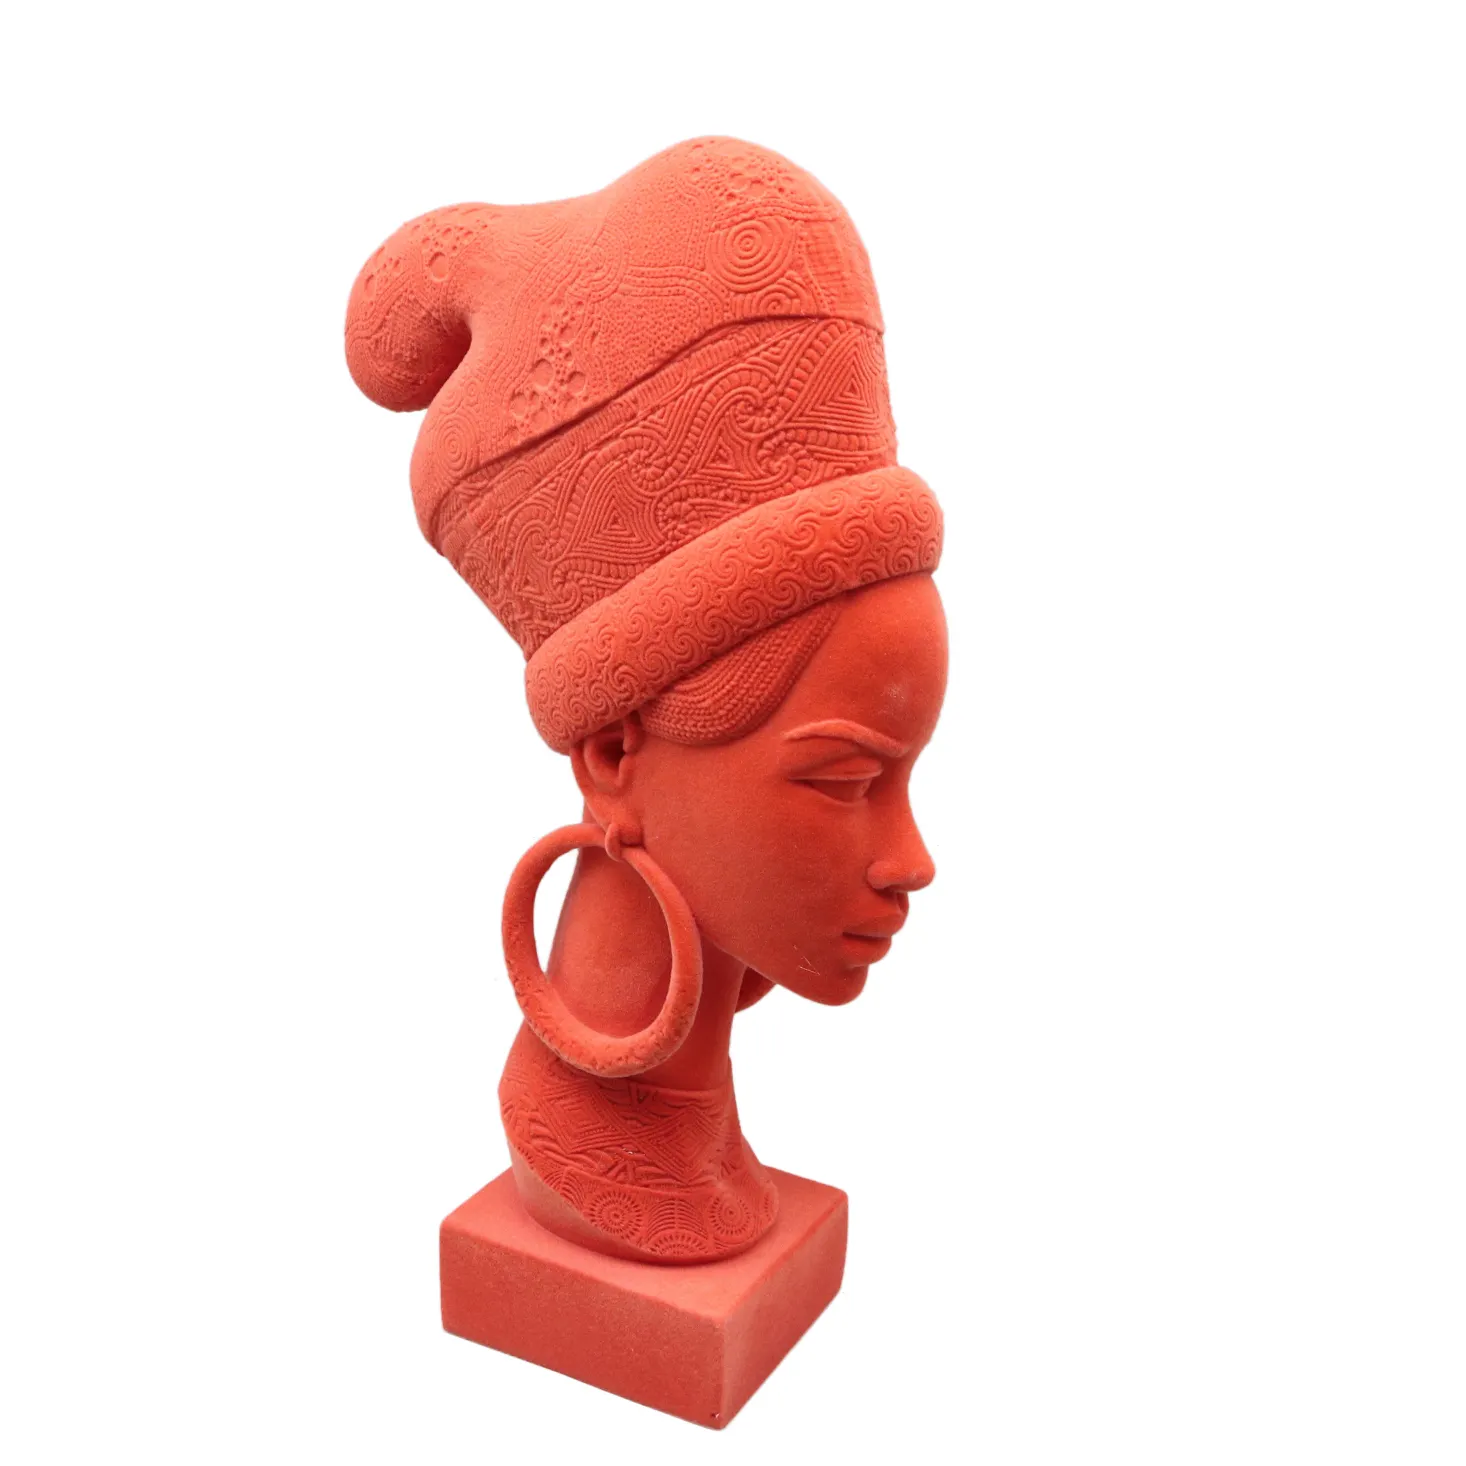 Estatua de cabeza de mujer egipcia Flocado de resina para decoración del hogar